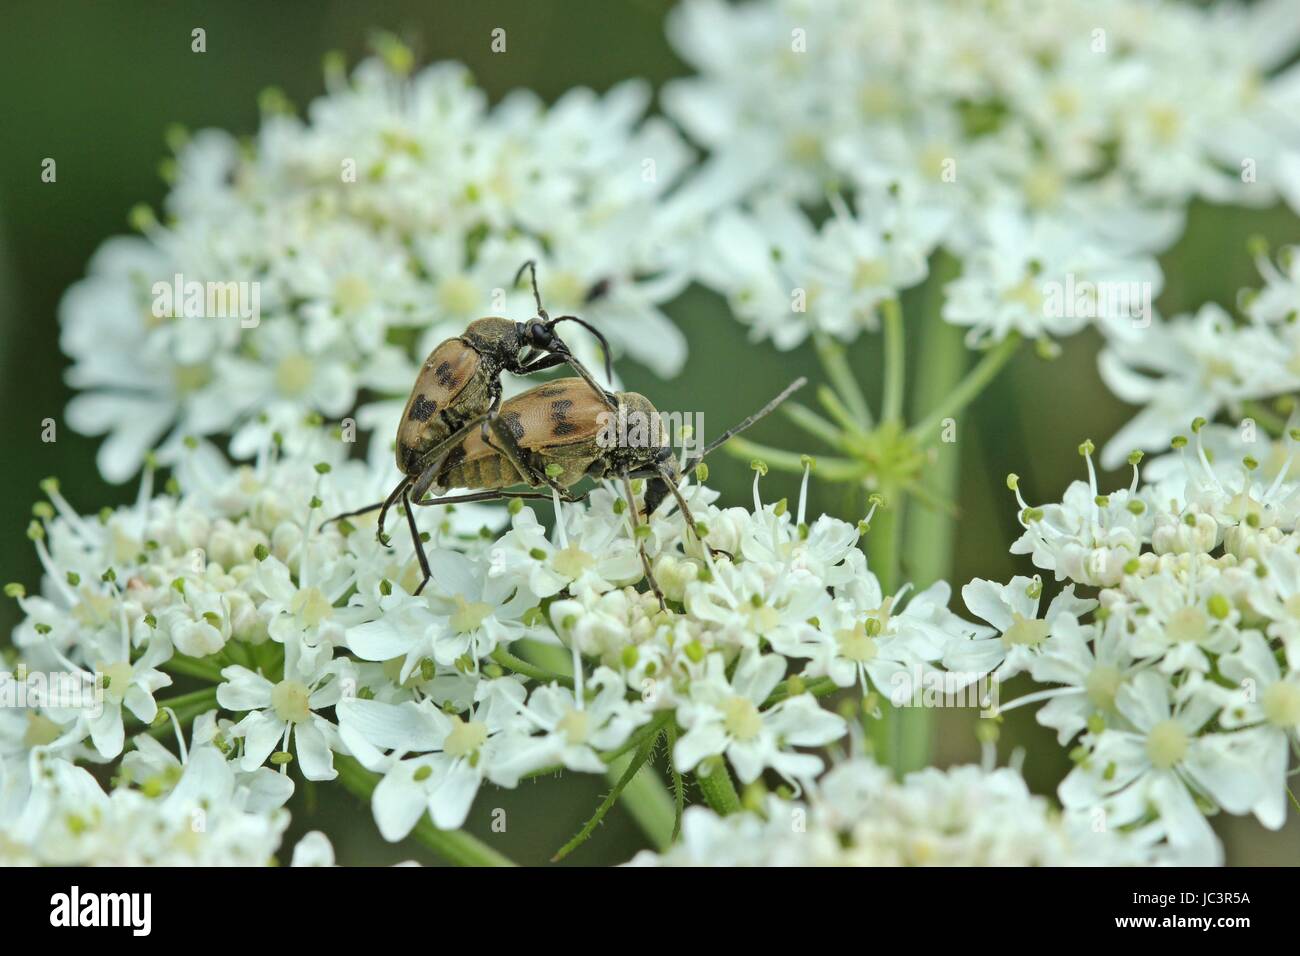 pairing spotted flowers bocks (pachytodes cerambyciformis) Stock Photo